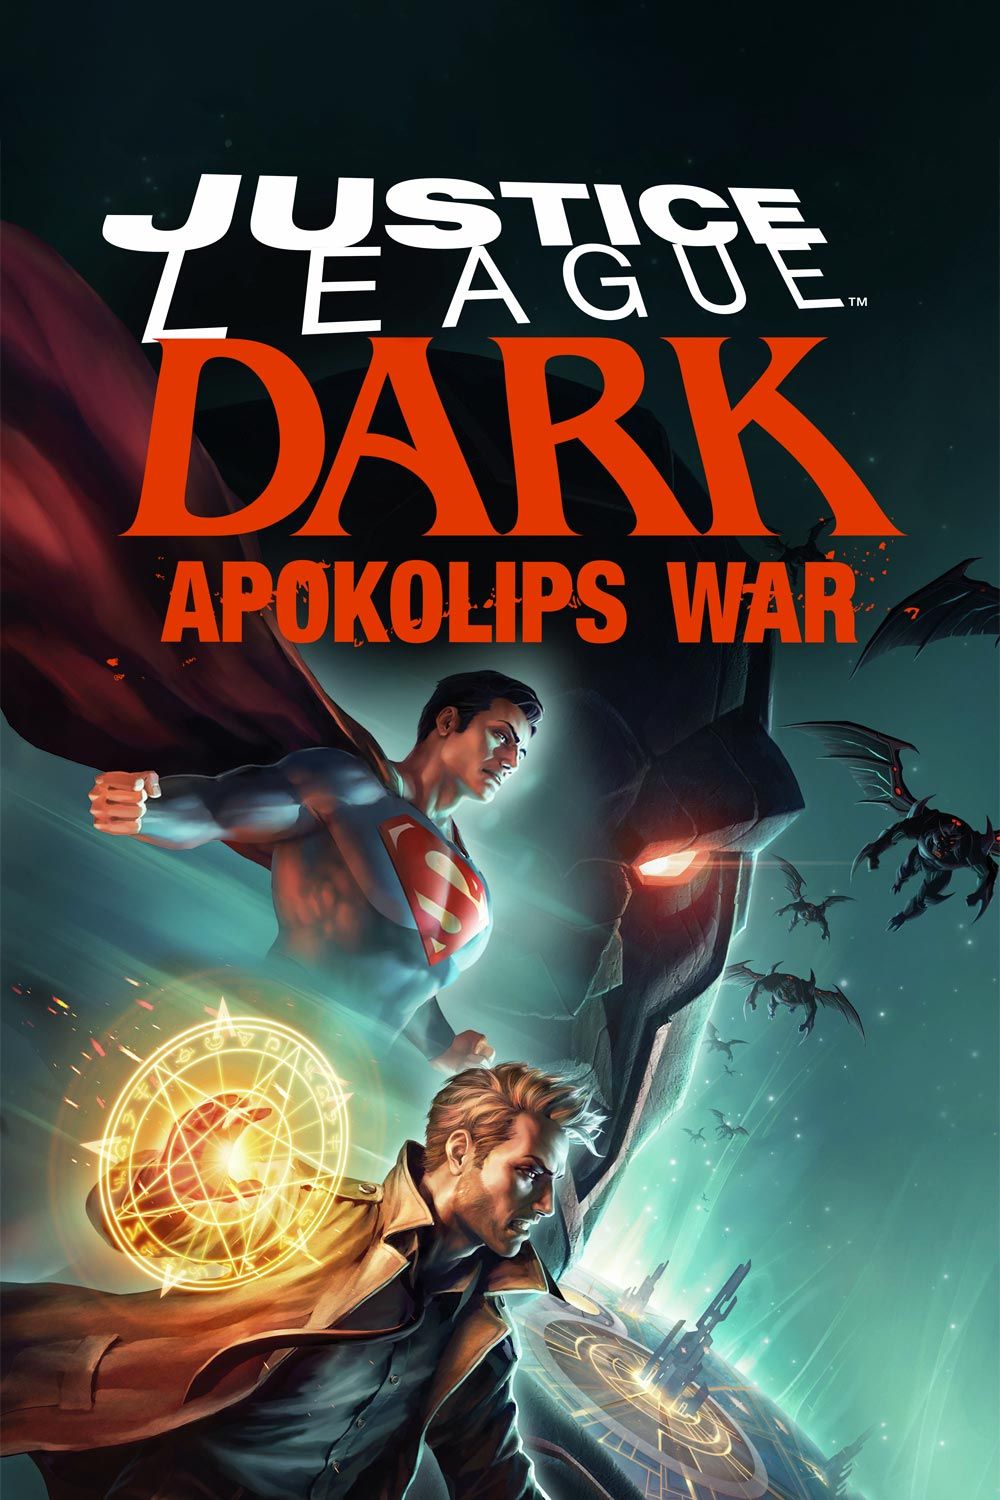 Watch Justice League Dark: Apokolips War Online